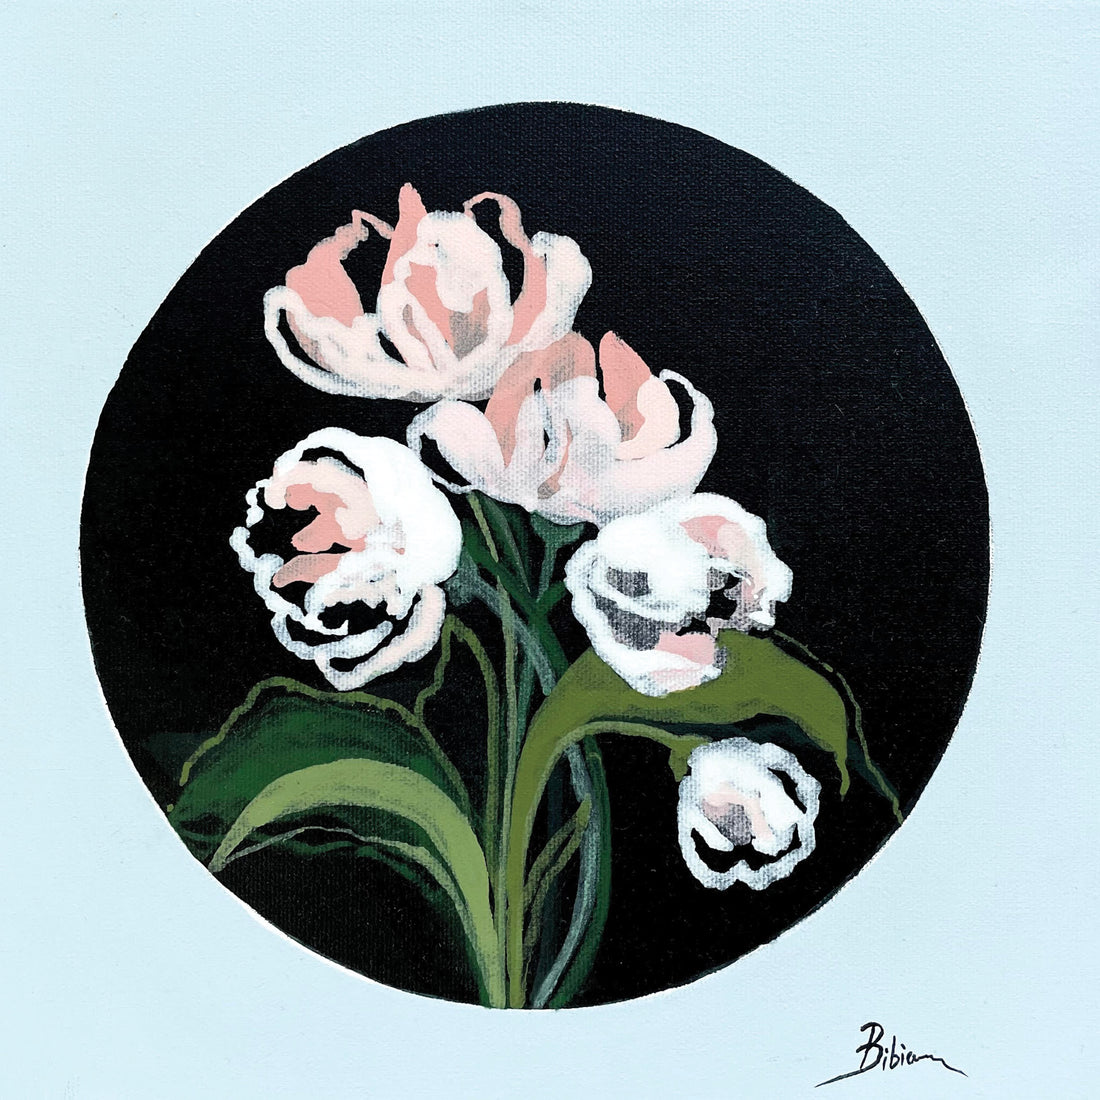 Bibiana Hooper "Solari 7" abstract floral painting Canadian Artist